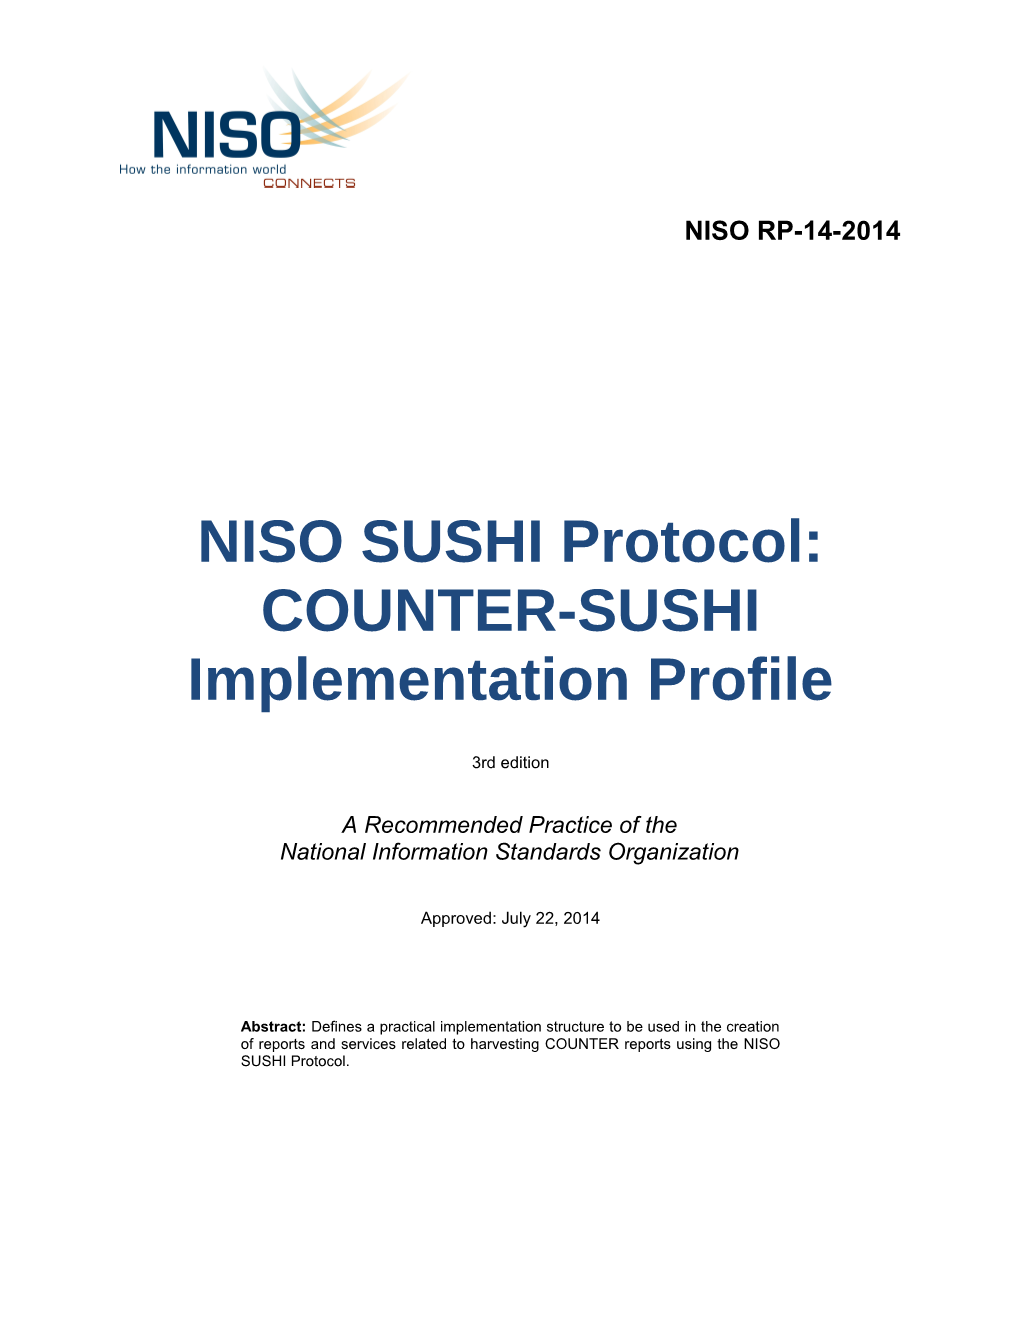 NISO SUSHI Protocol: COUNTER-SUSHI Implementation Profile